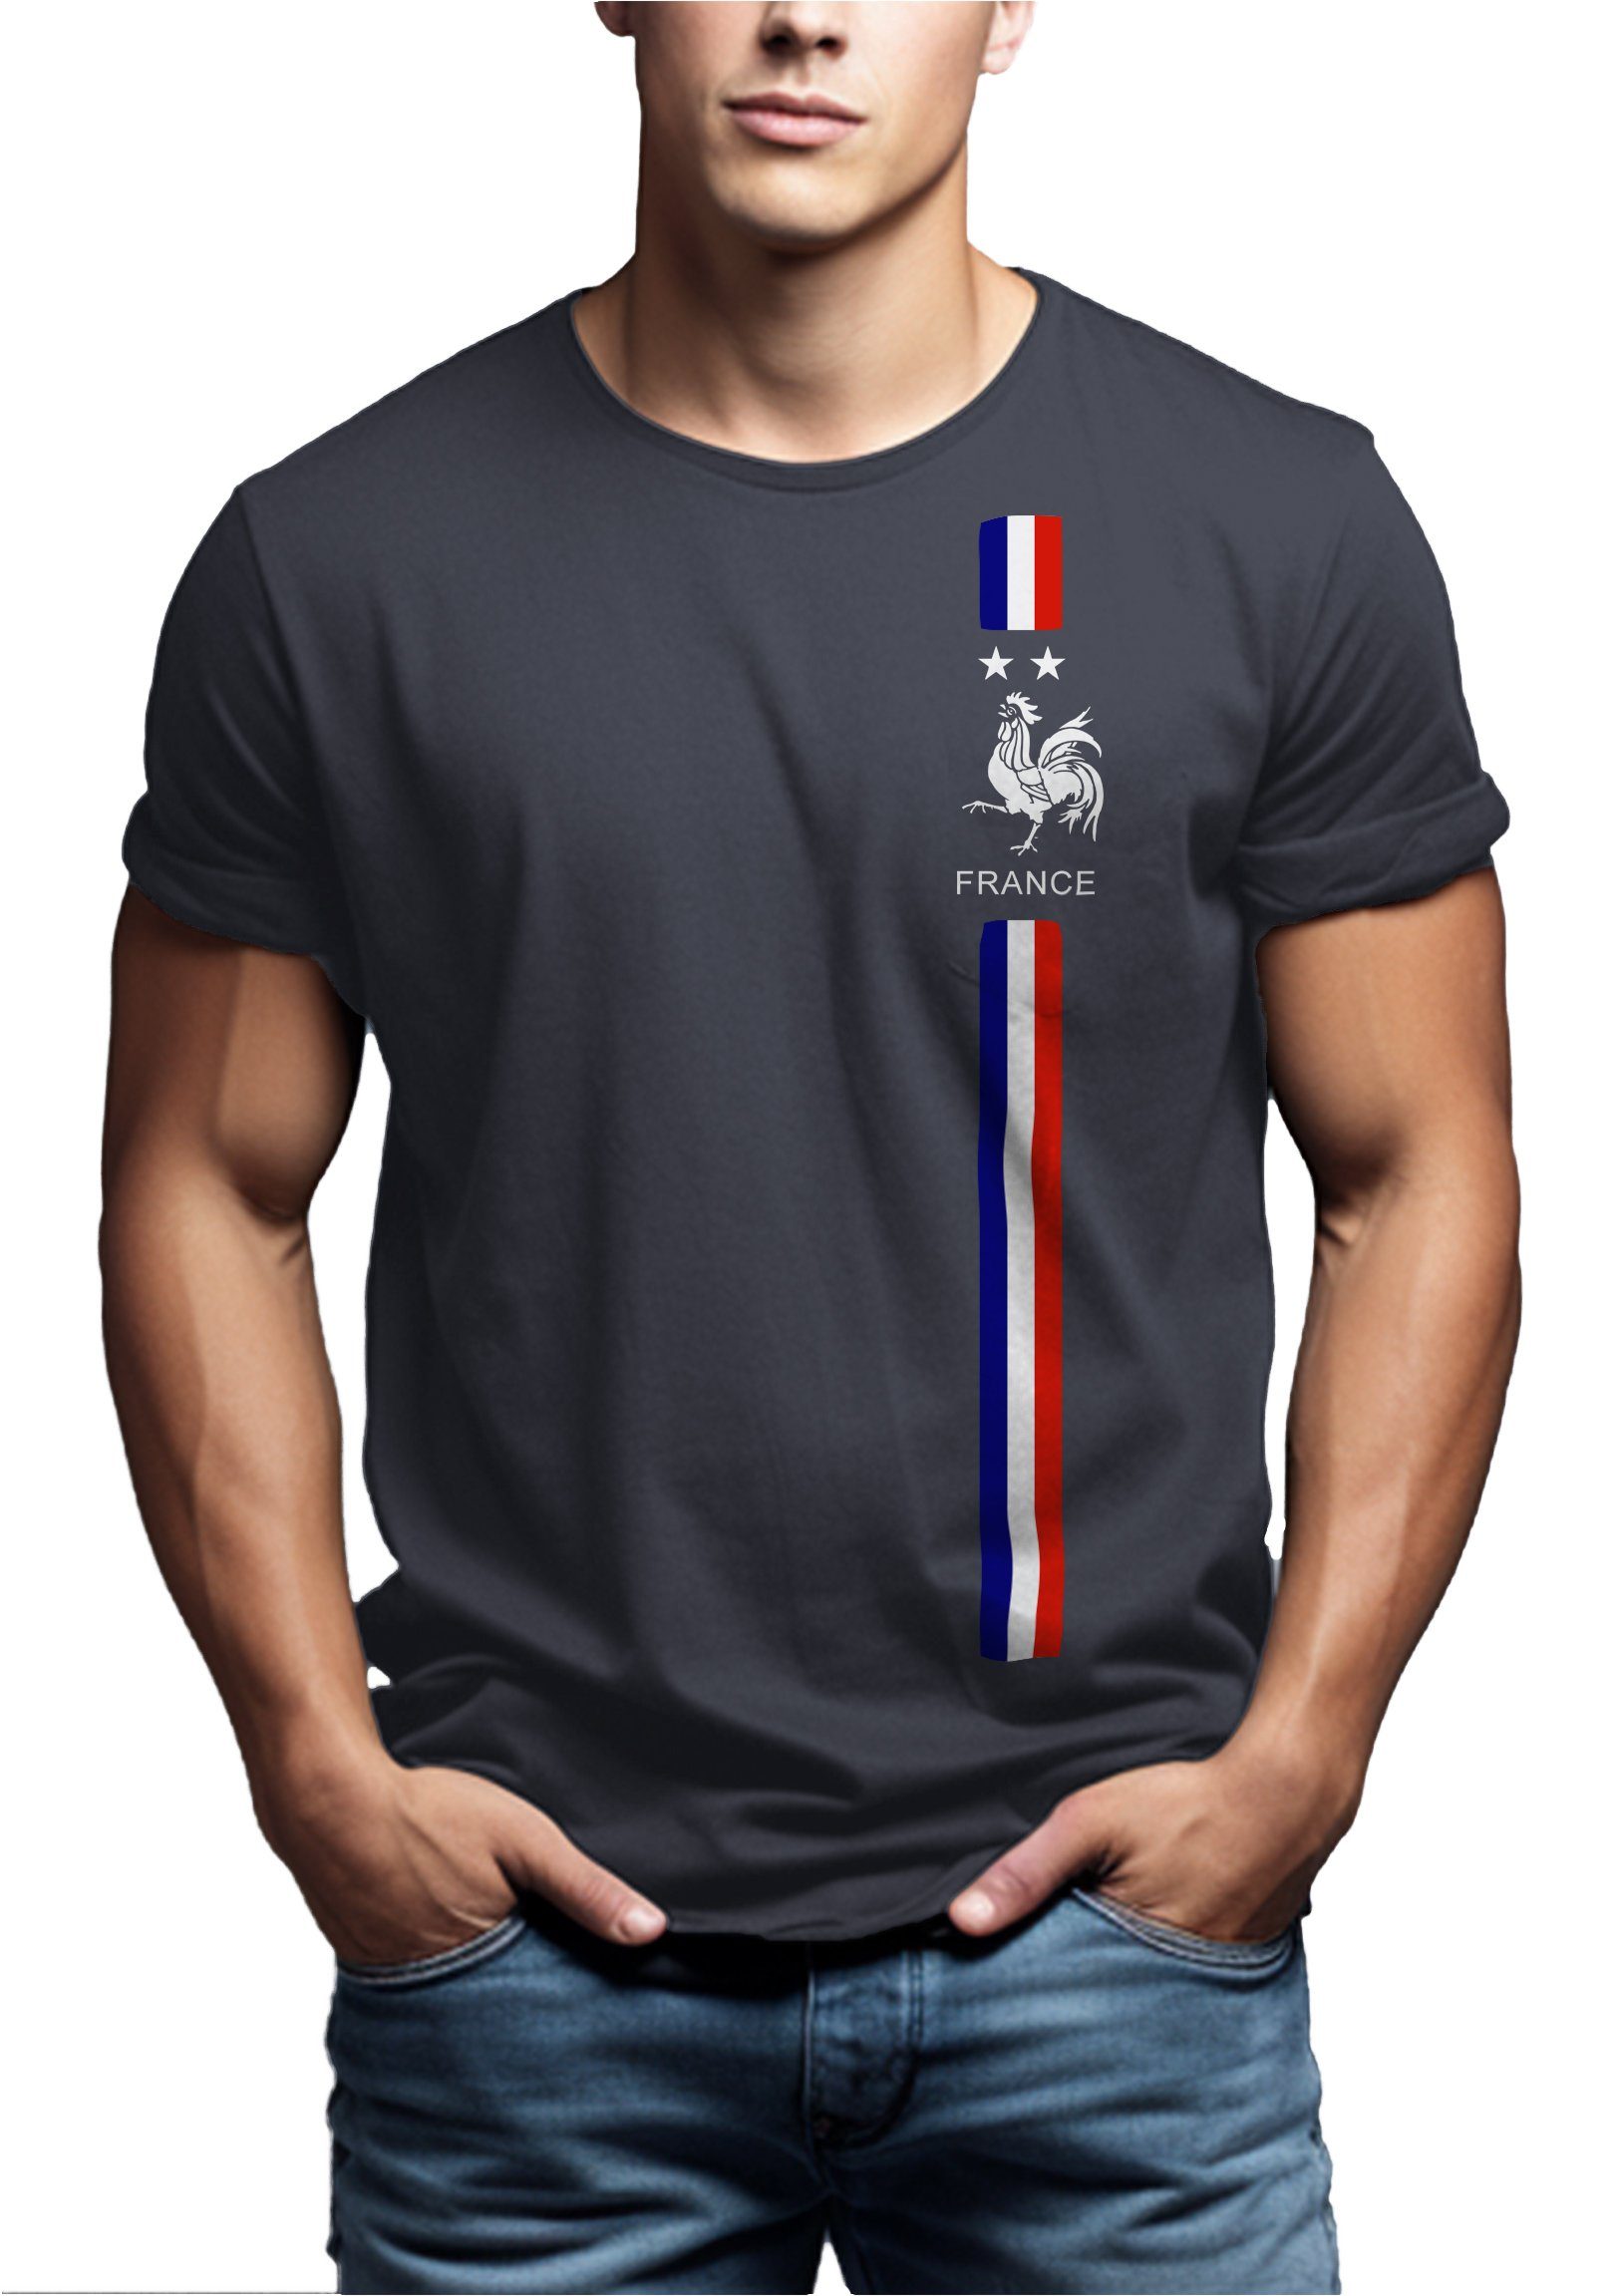 MAKAYA Print-Shirt Herren Fußball Trikot Frankreich Blaugrau Männer Flagge Fahne Geschenke